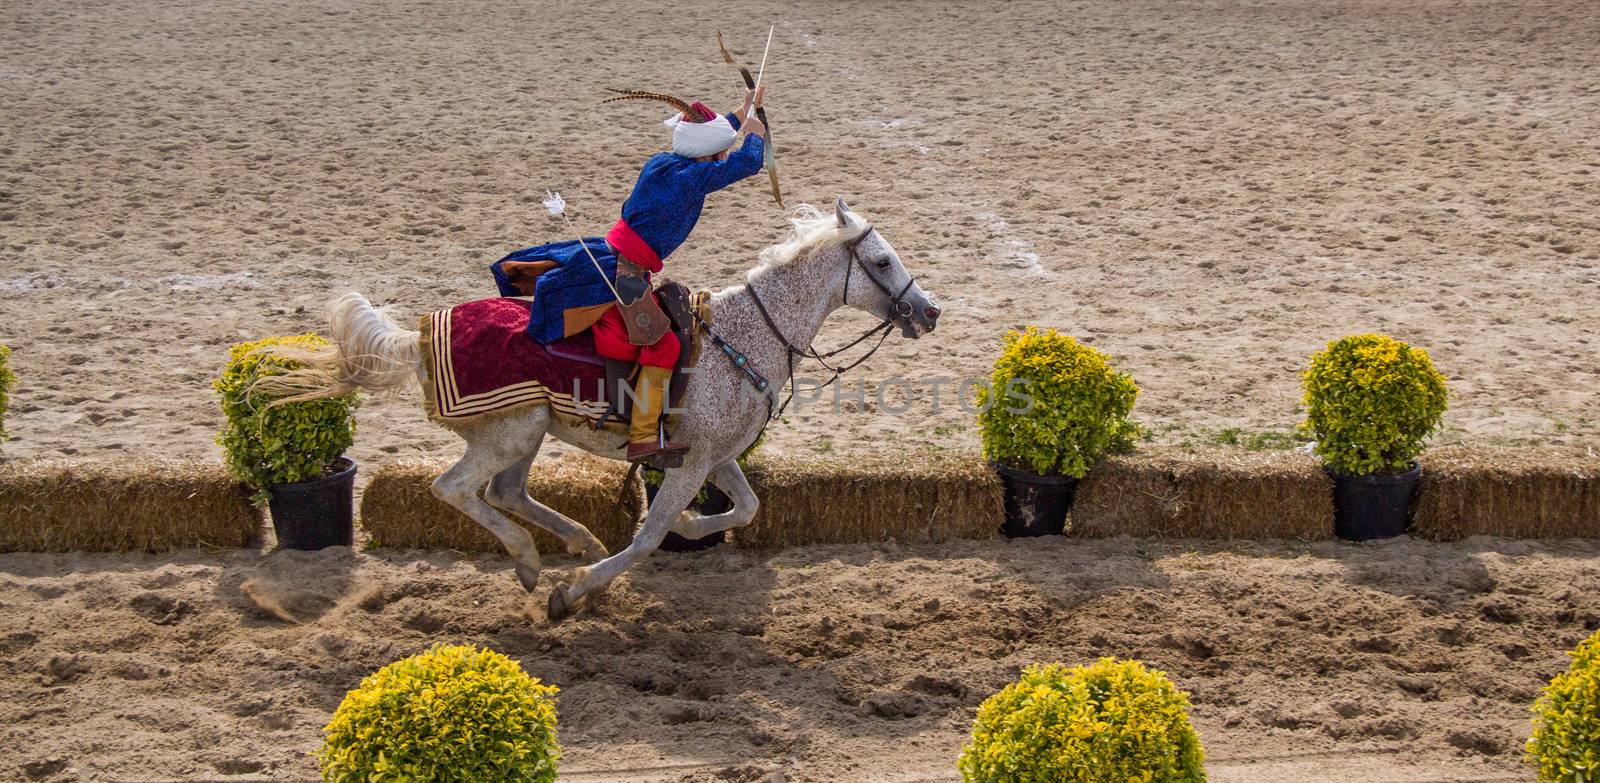 Ottoman horseman  archer riding and shooting  by berkay